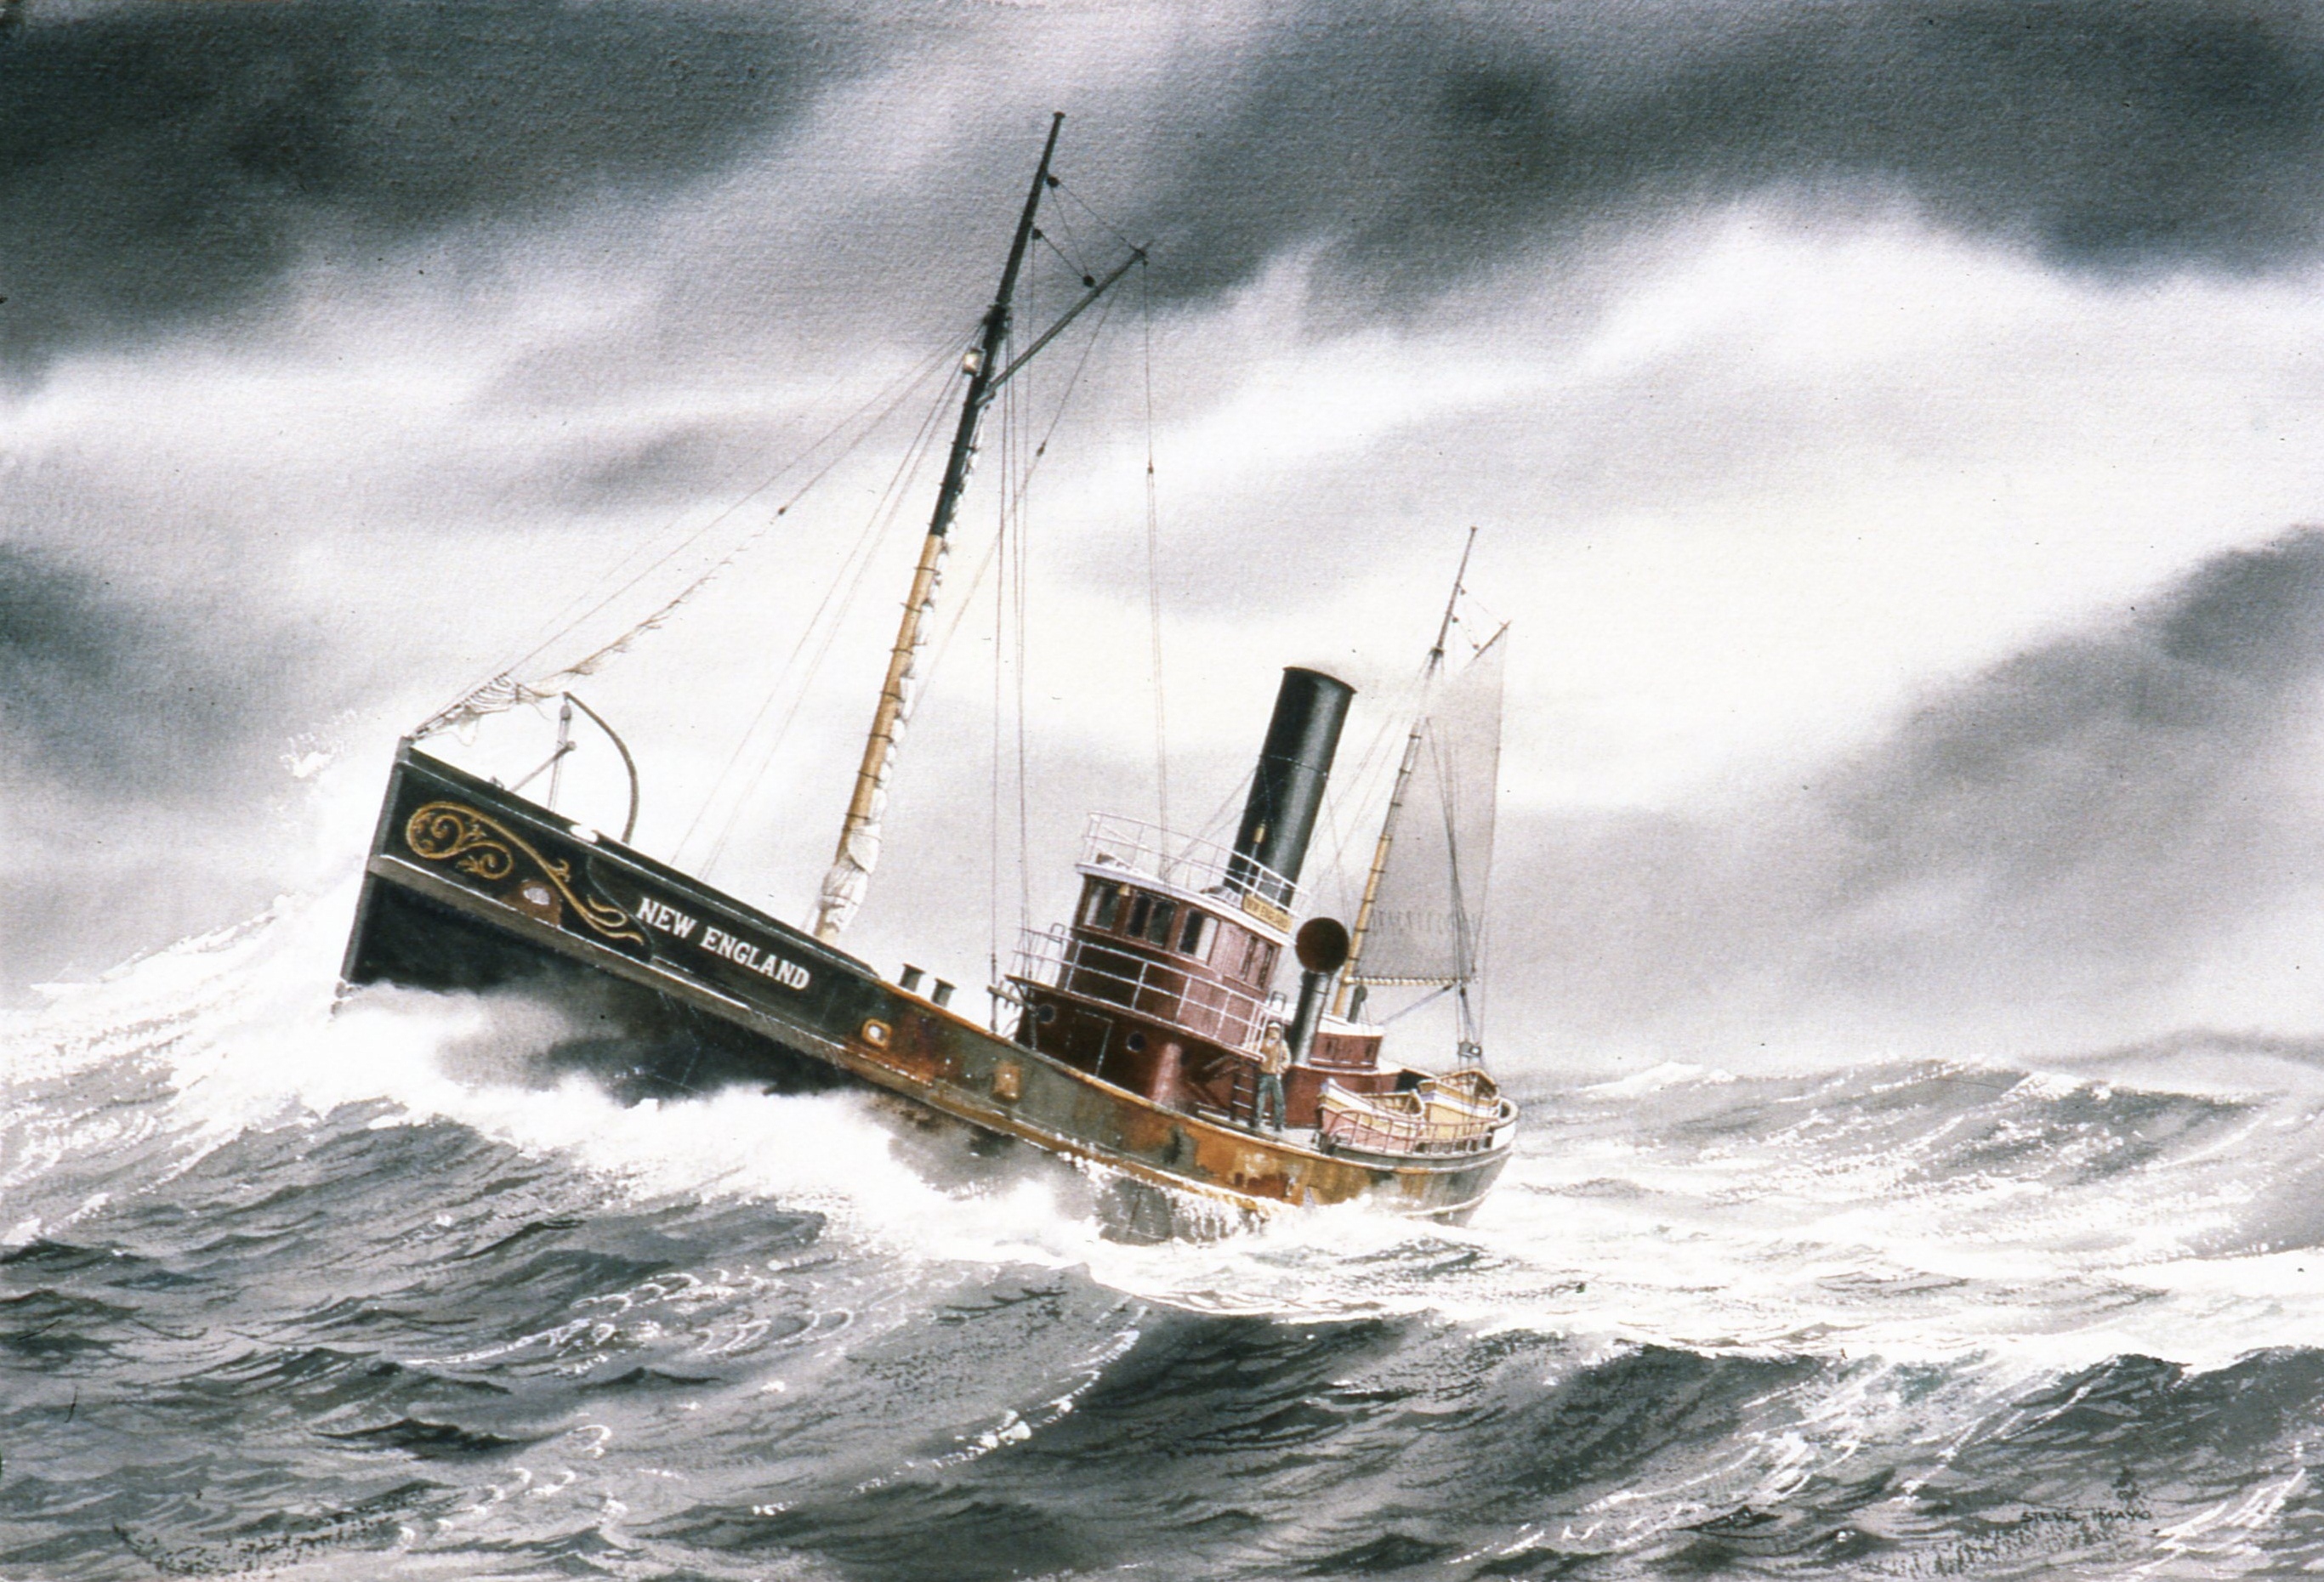 NEW ENGLAND, codfishing steamer